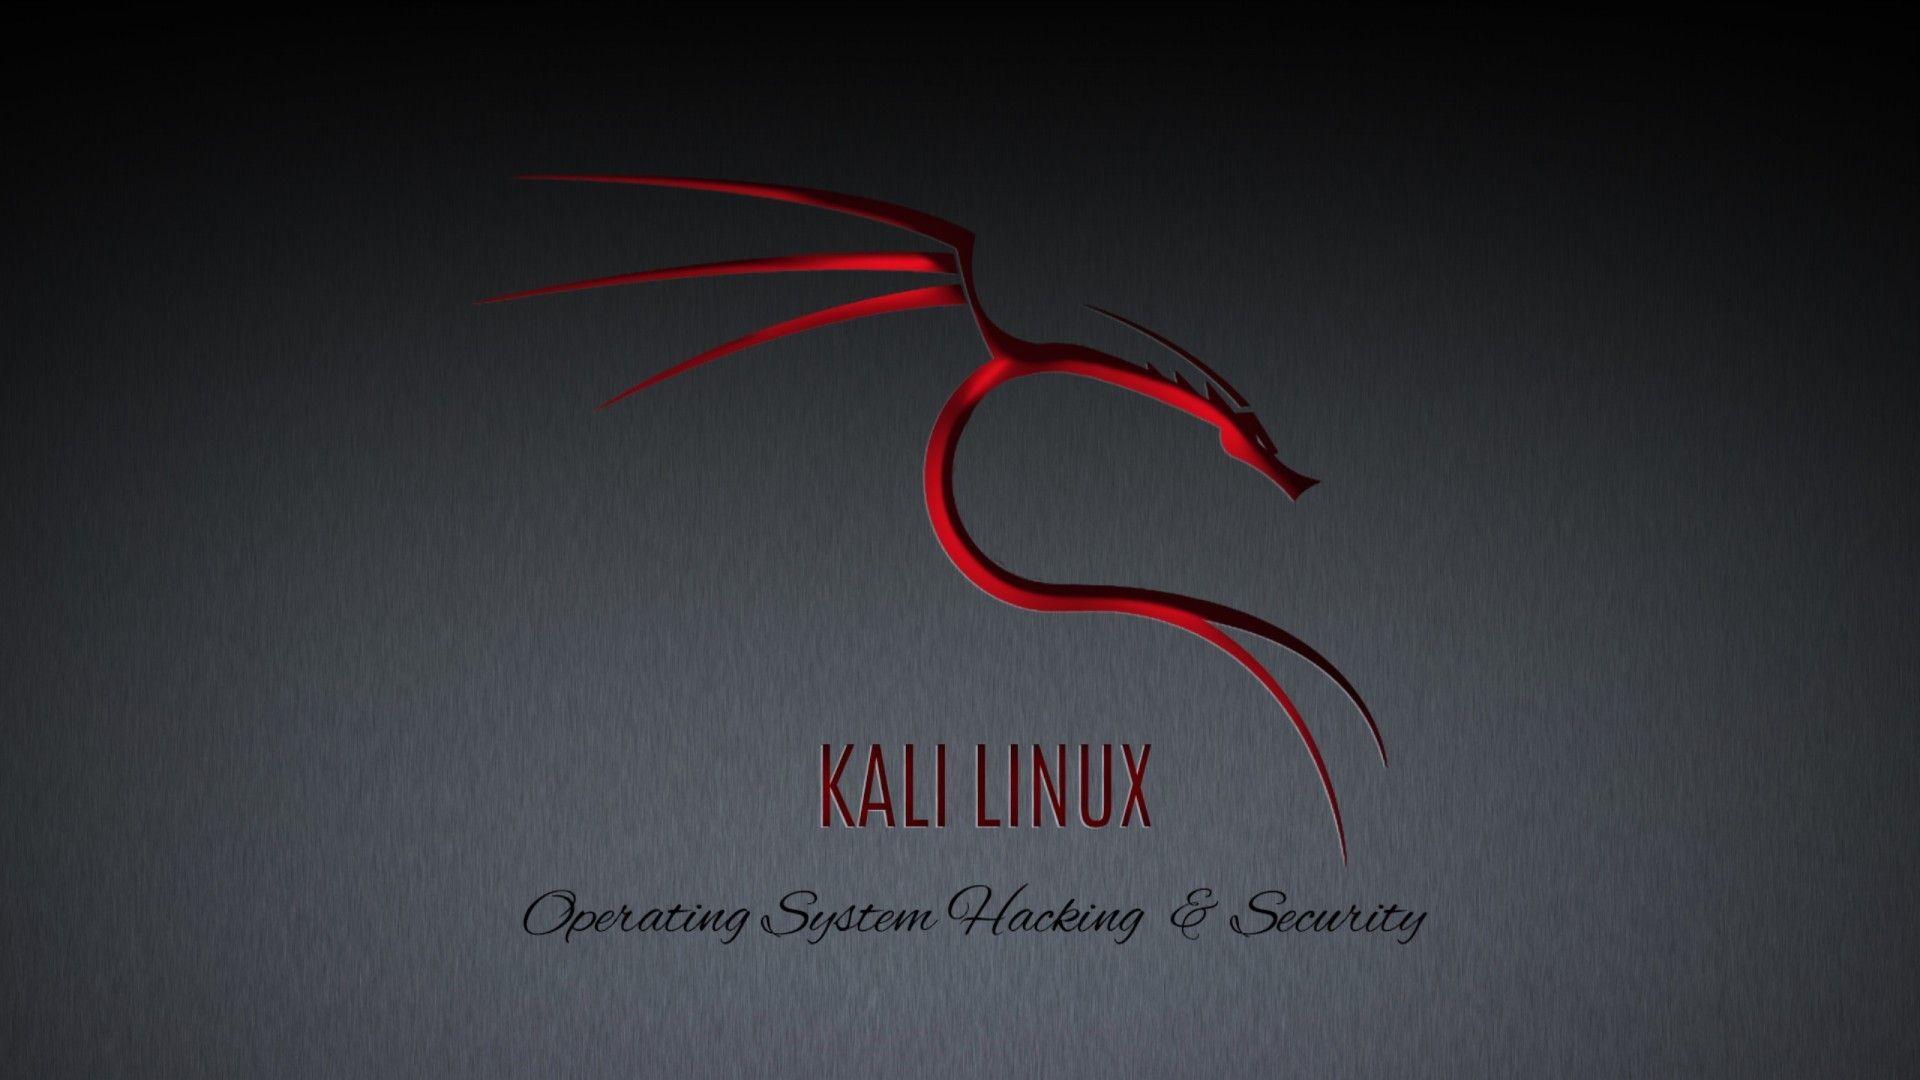 Kali Linux Wallpapers 1920x1080 - Wallpaper Cave